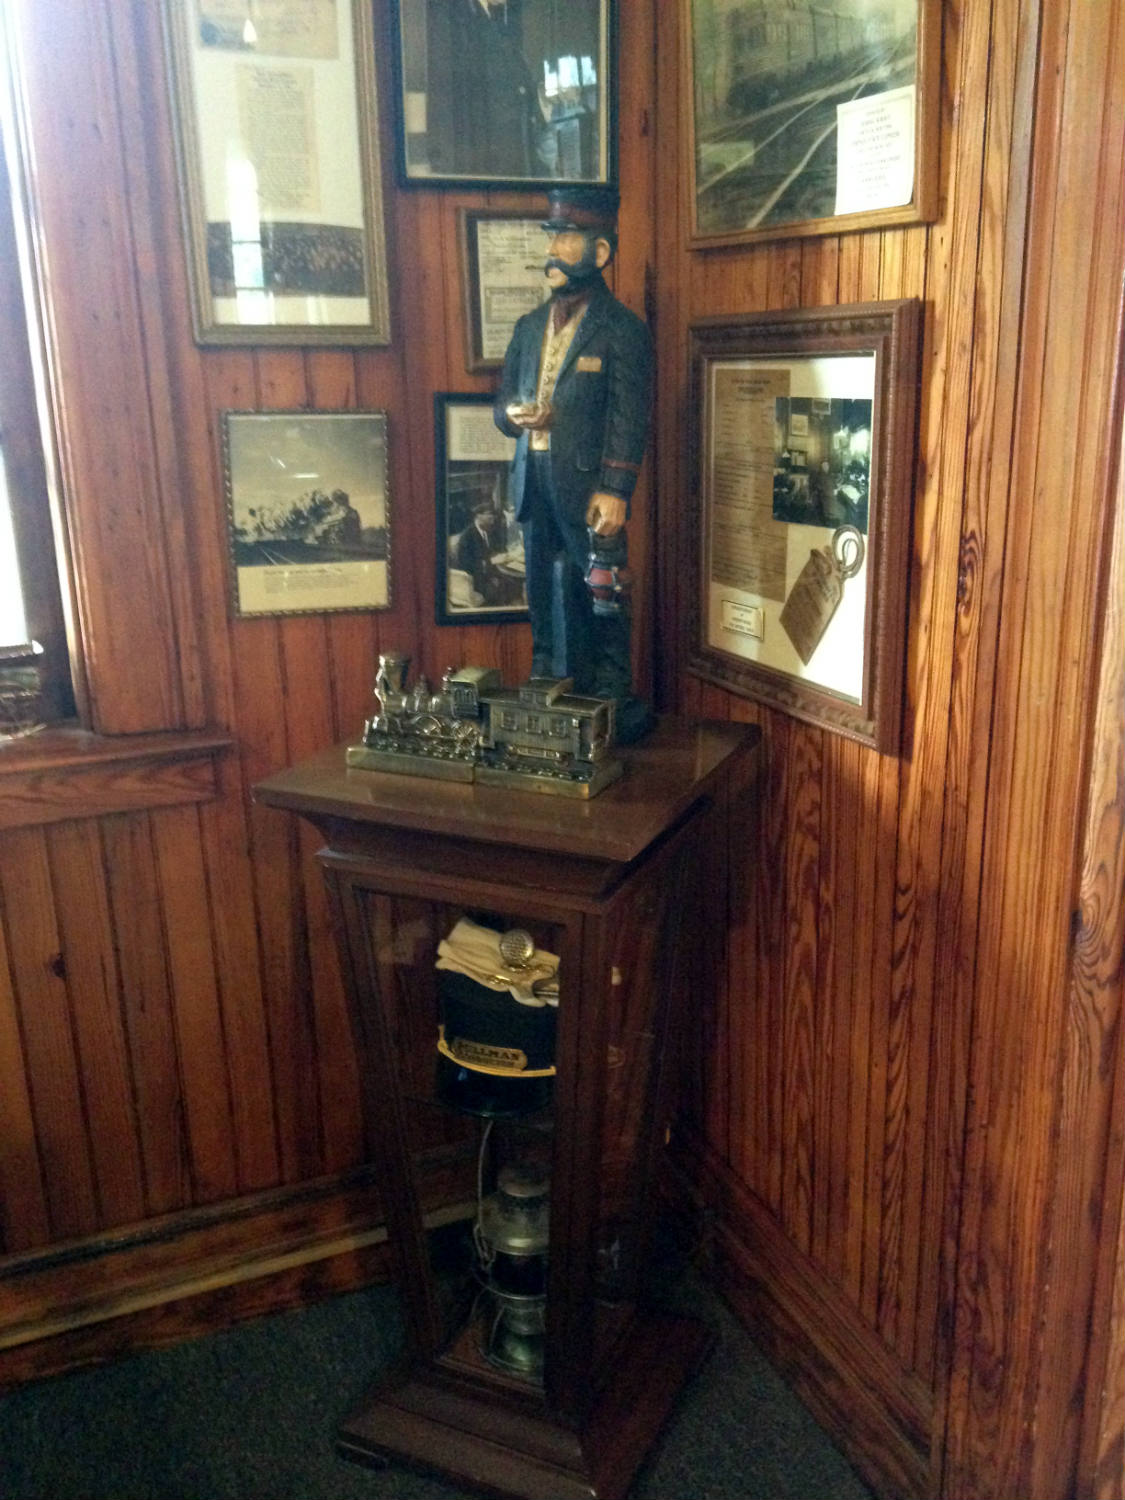 Collectibles at Medina Railroad Museum